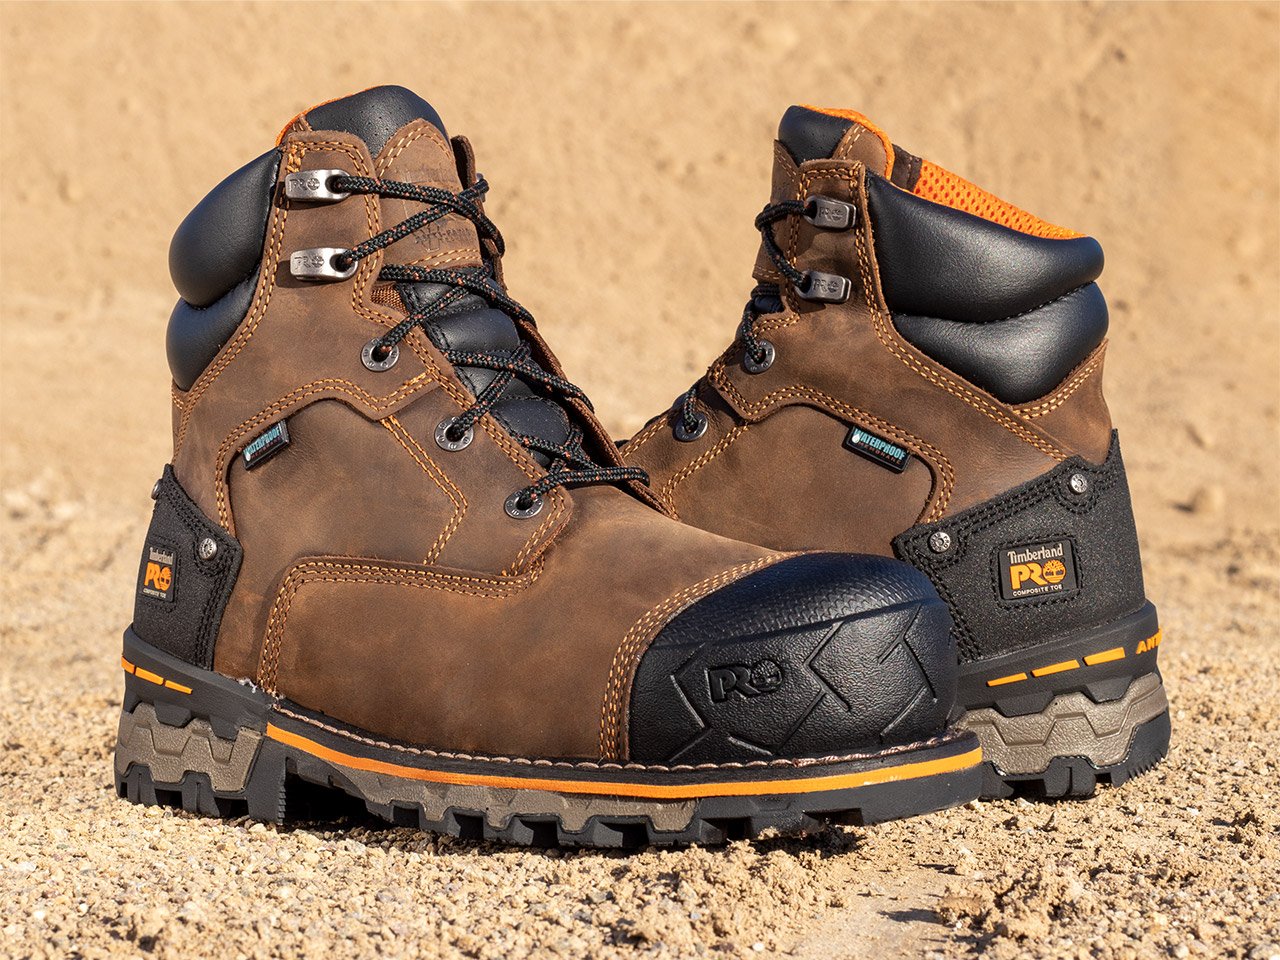 Men's Steel Toe Boots Net Sneakers Safety Work Shoes Lightweight US 